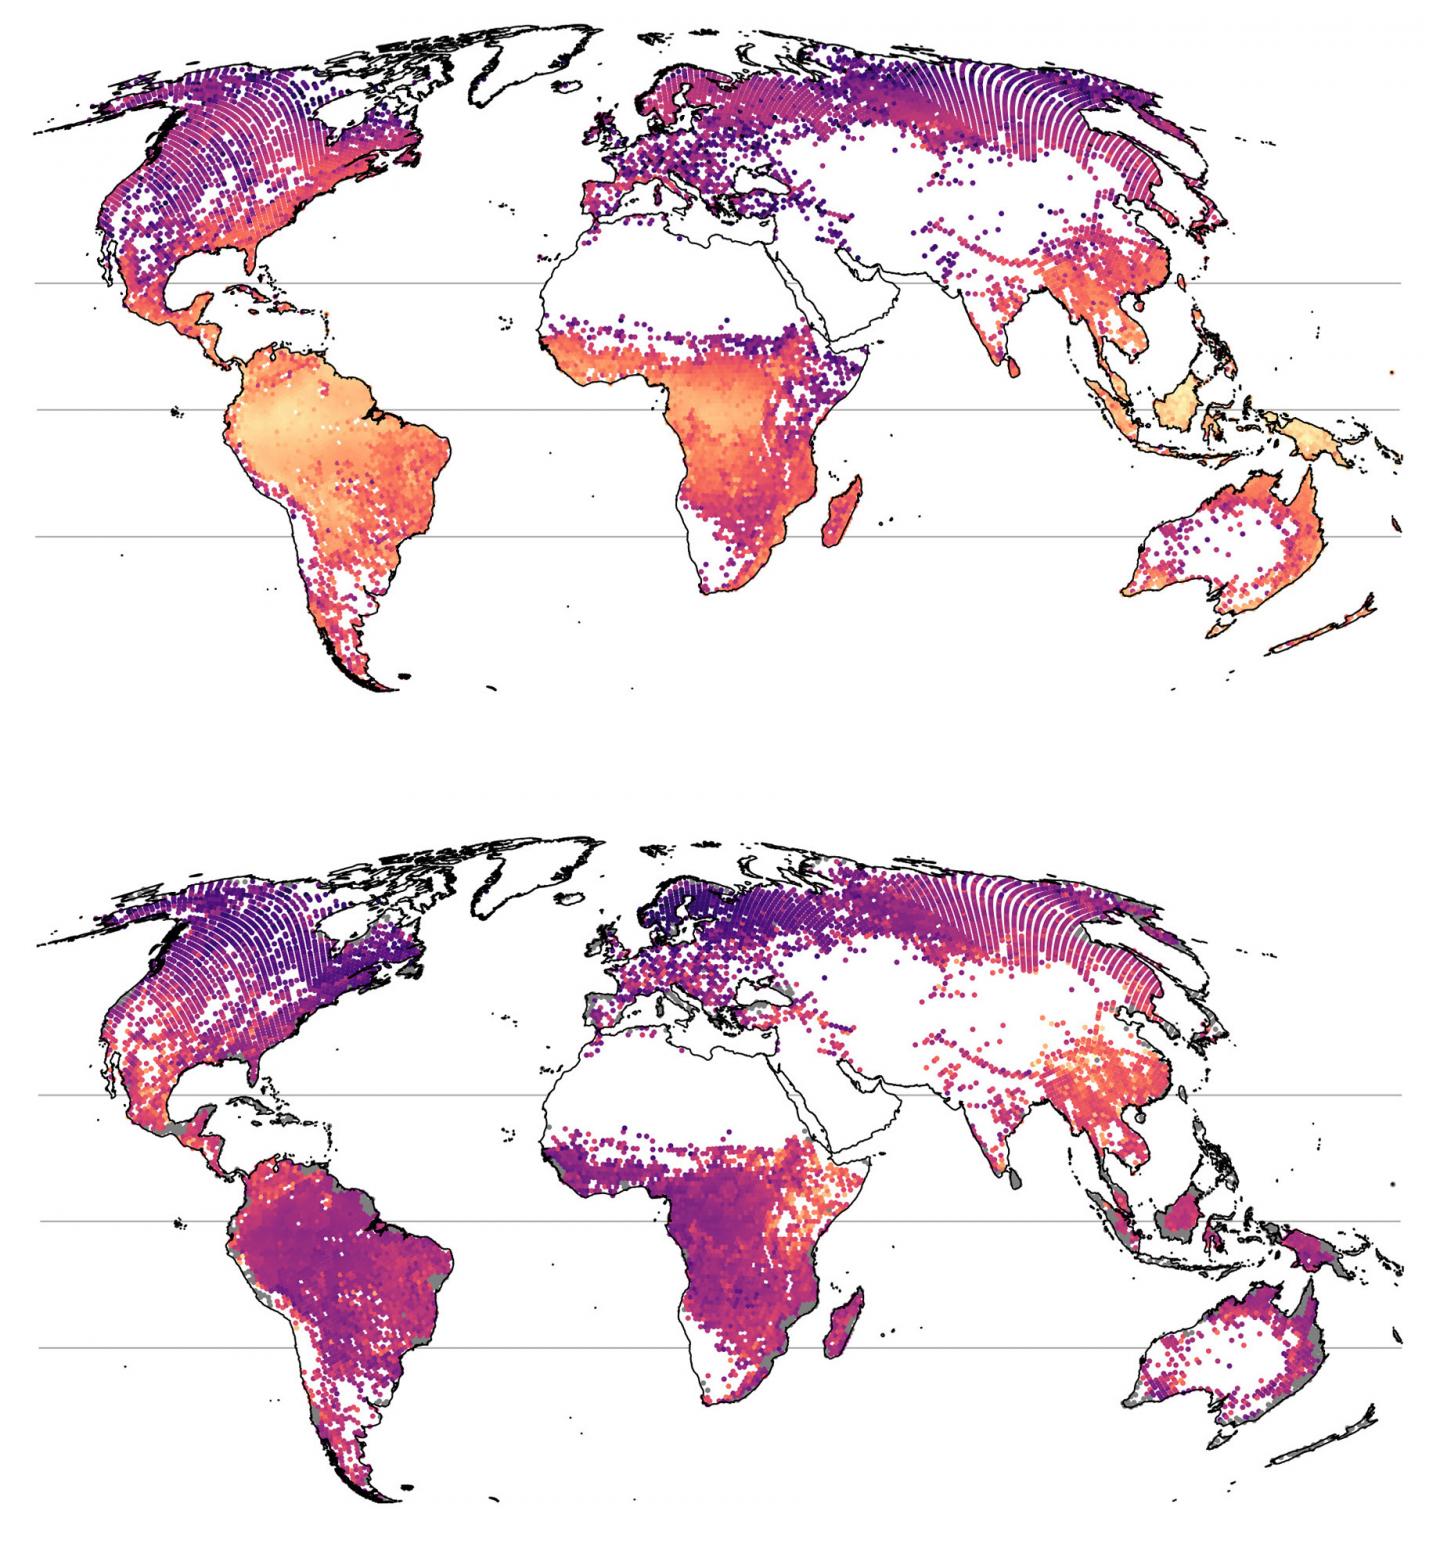 World Map of Tree Diversity: Local Scale (Upper Figure), Regional Scale (Lower Figure)